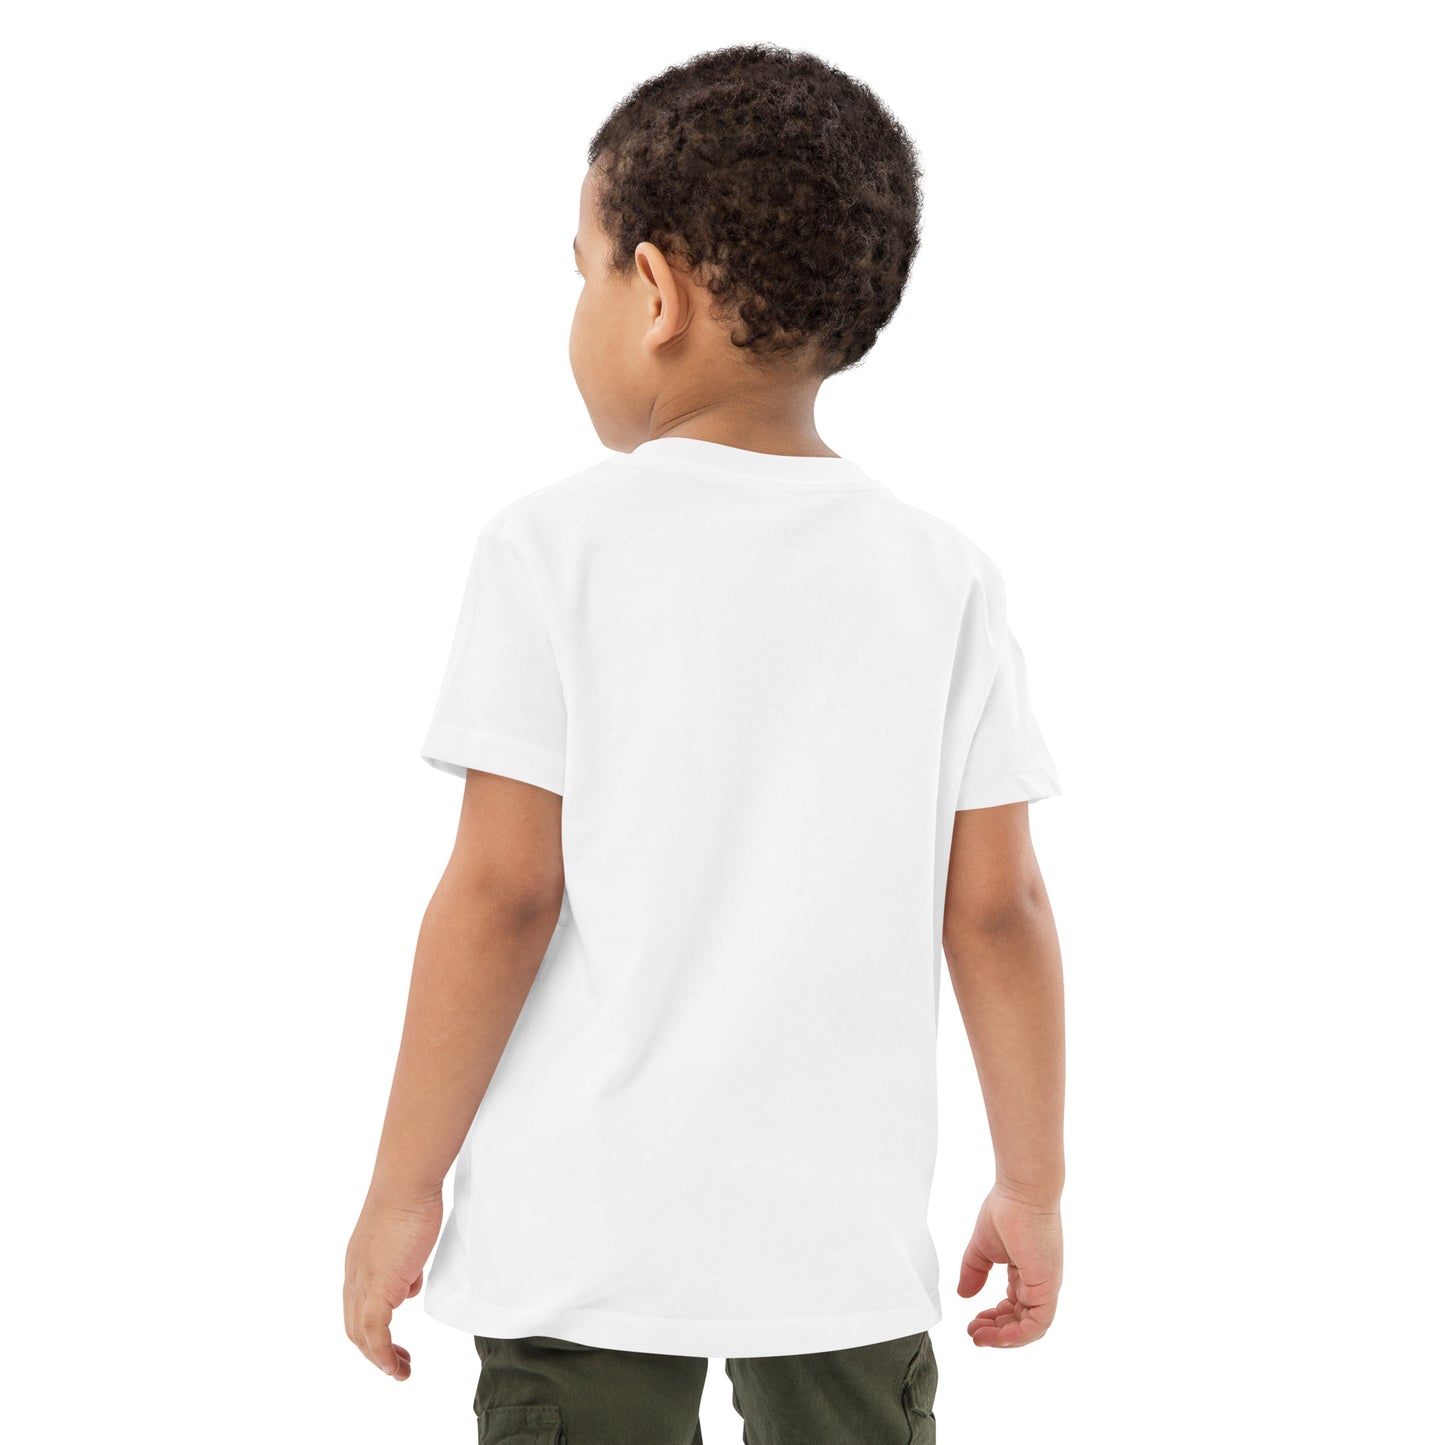 Königskind - Bio-Baumwoll-T-Shirt - Kinder